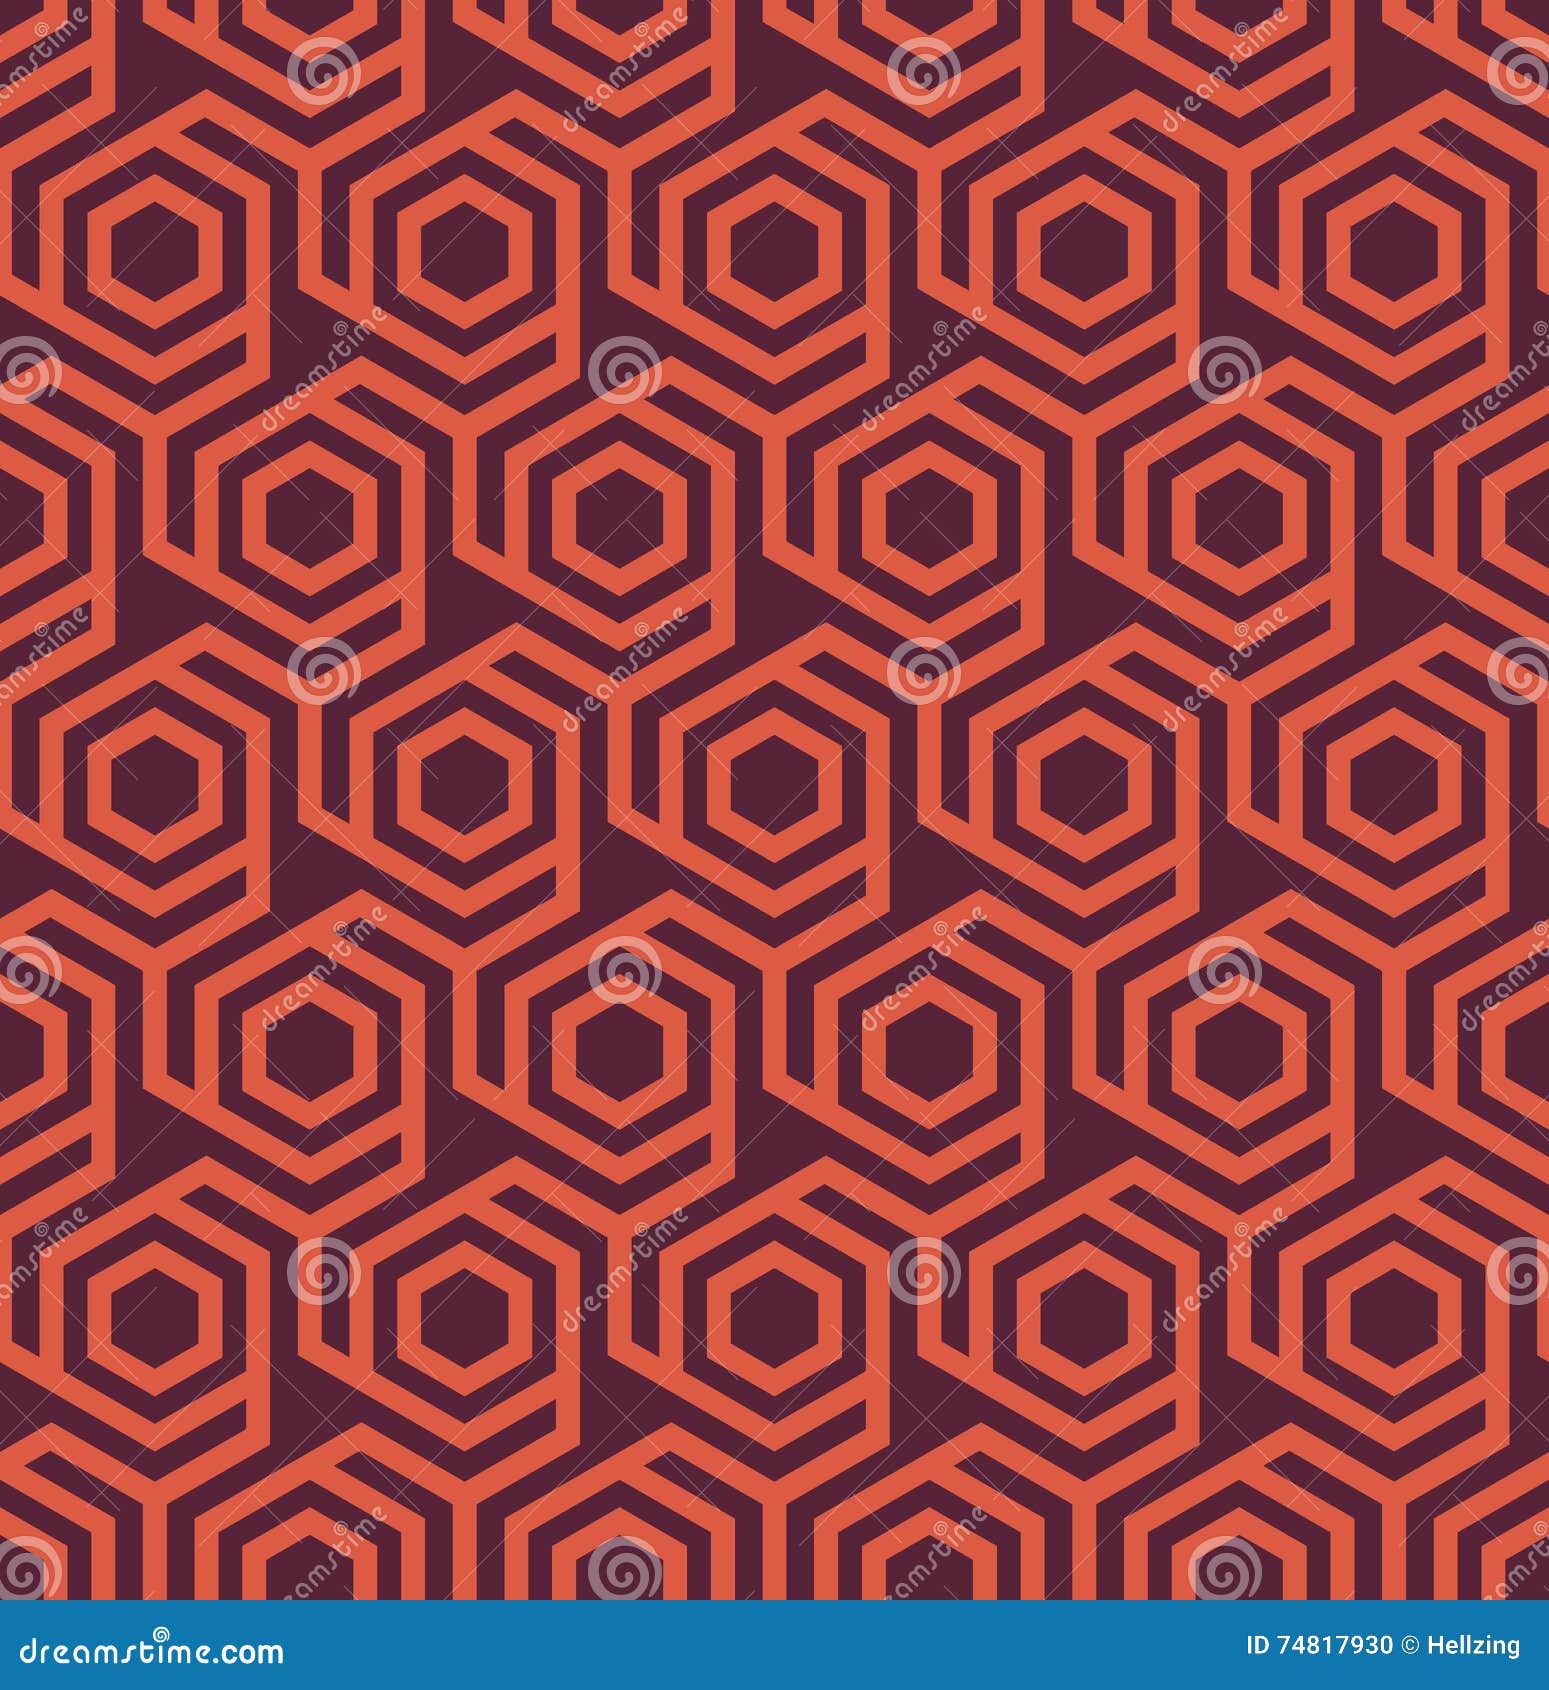 seamless geometric abstract hexagonal pattern - eps8